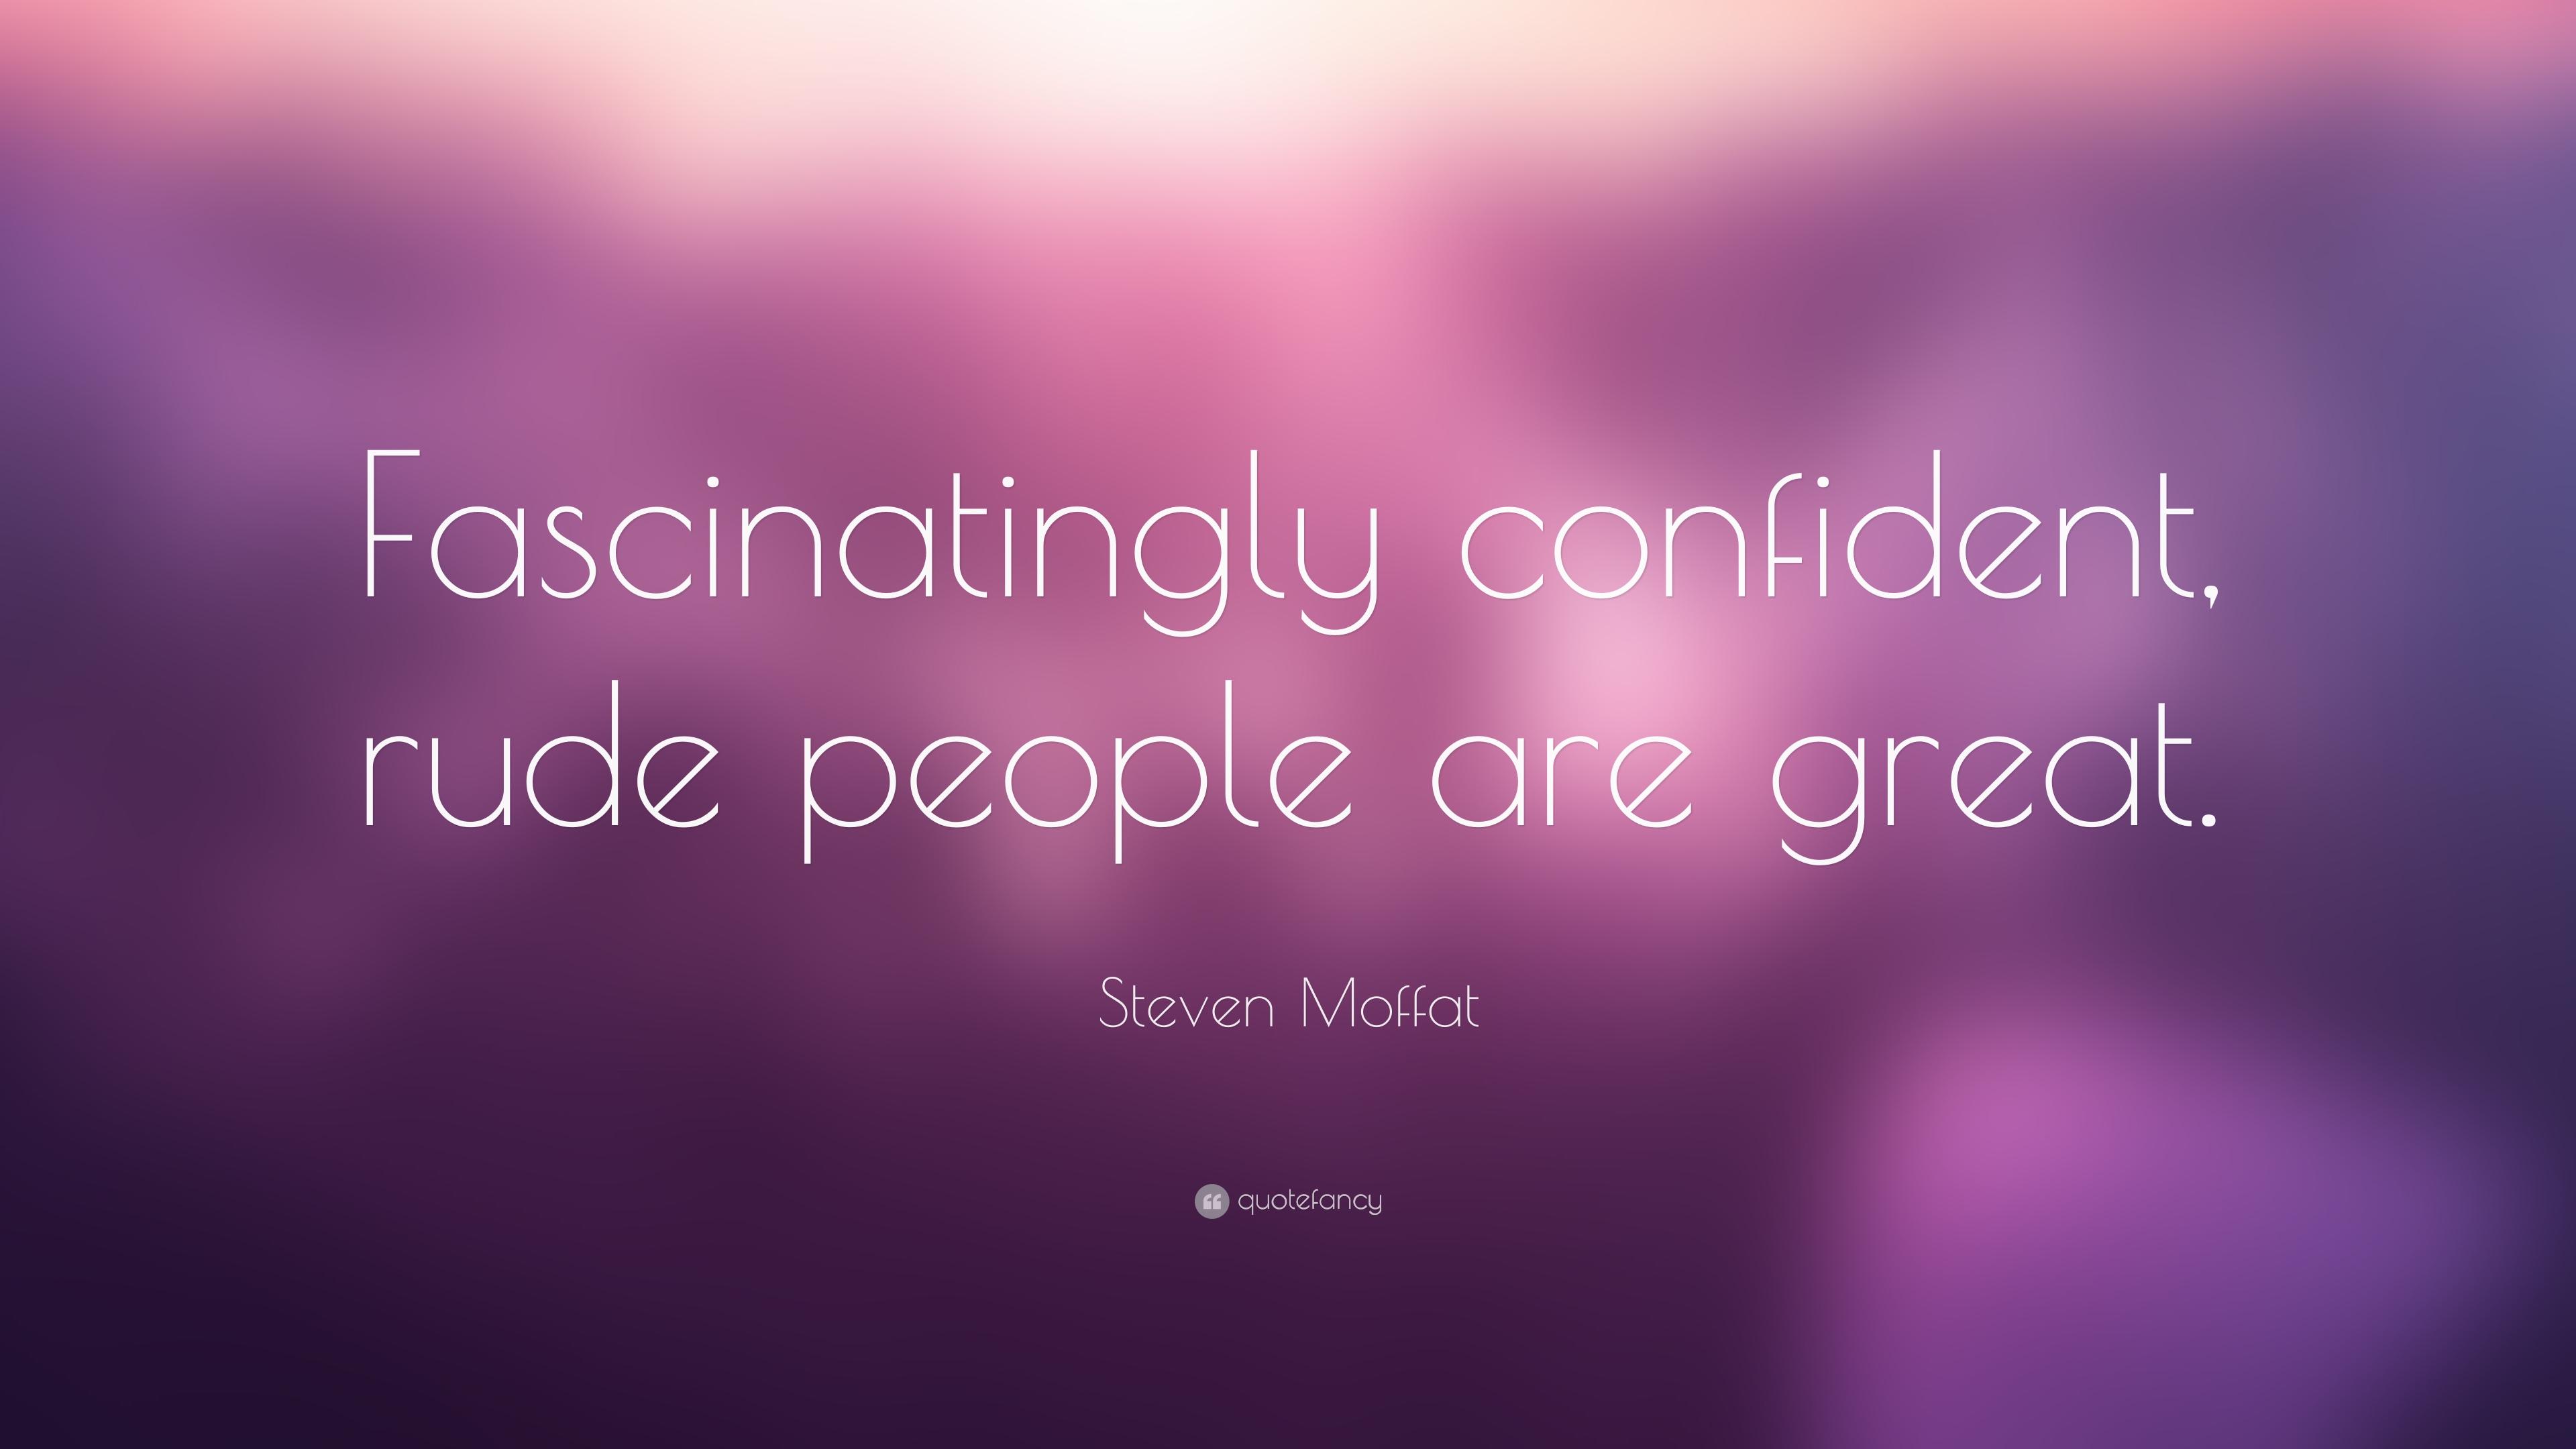 Steven Moffat Quote: “Fascinatingly confident, rude people